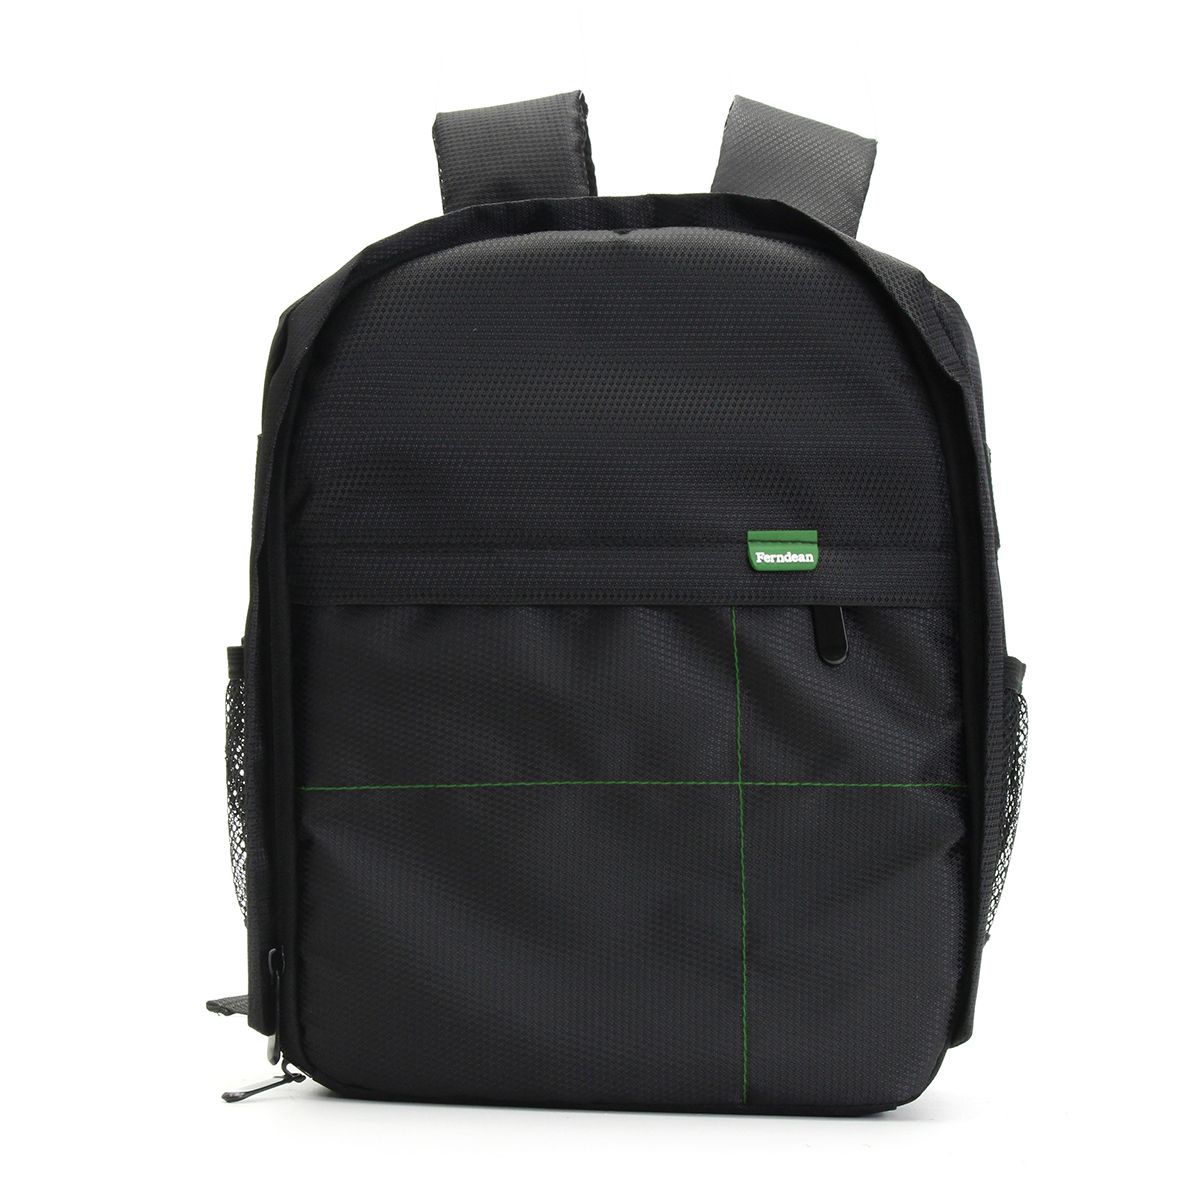 Ferndean-S8505-Waterproof-Camera-Backpack-Laptop-Bag-Rucksack-For-Canon-For-Nikon-DSLR-SLR-Camera-1359968